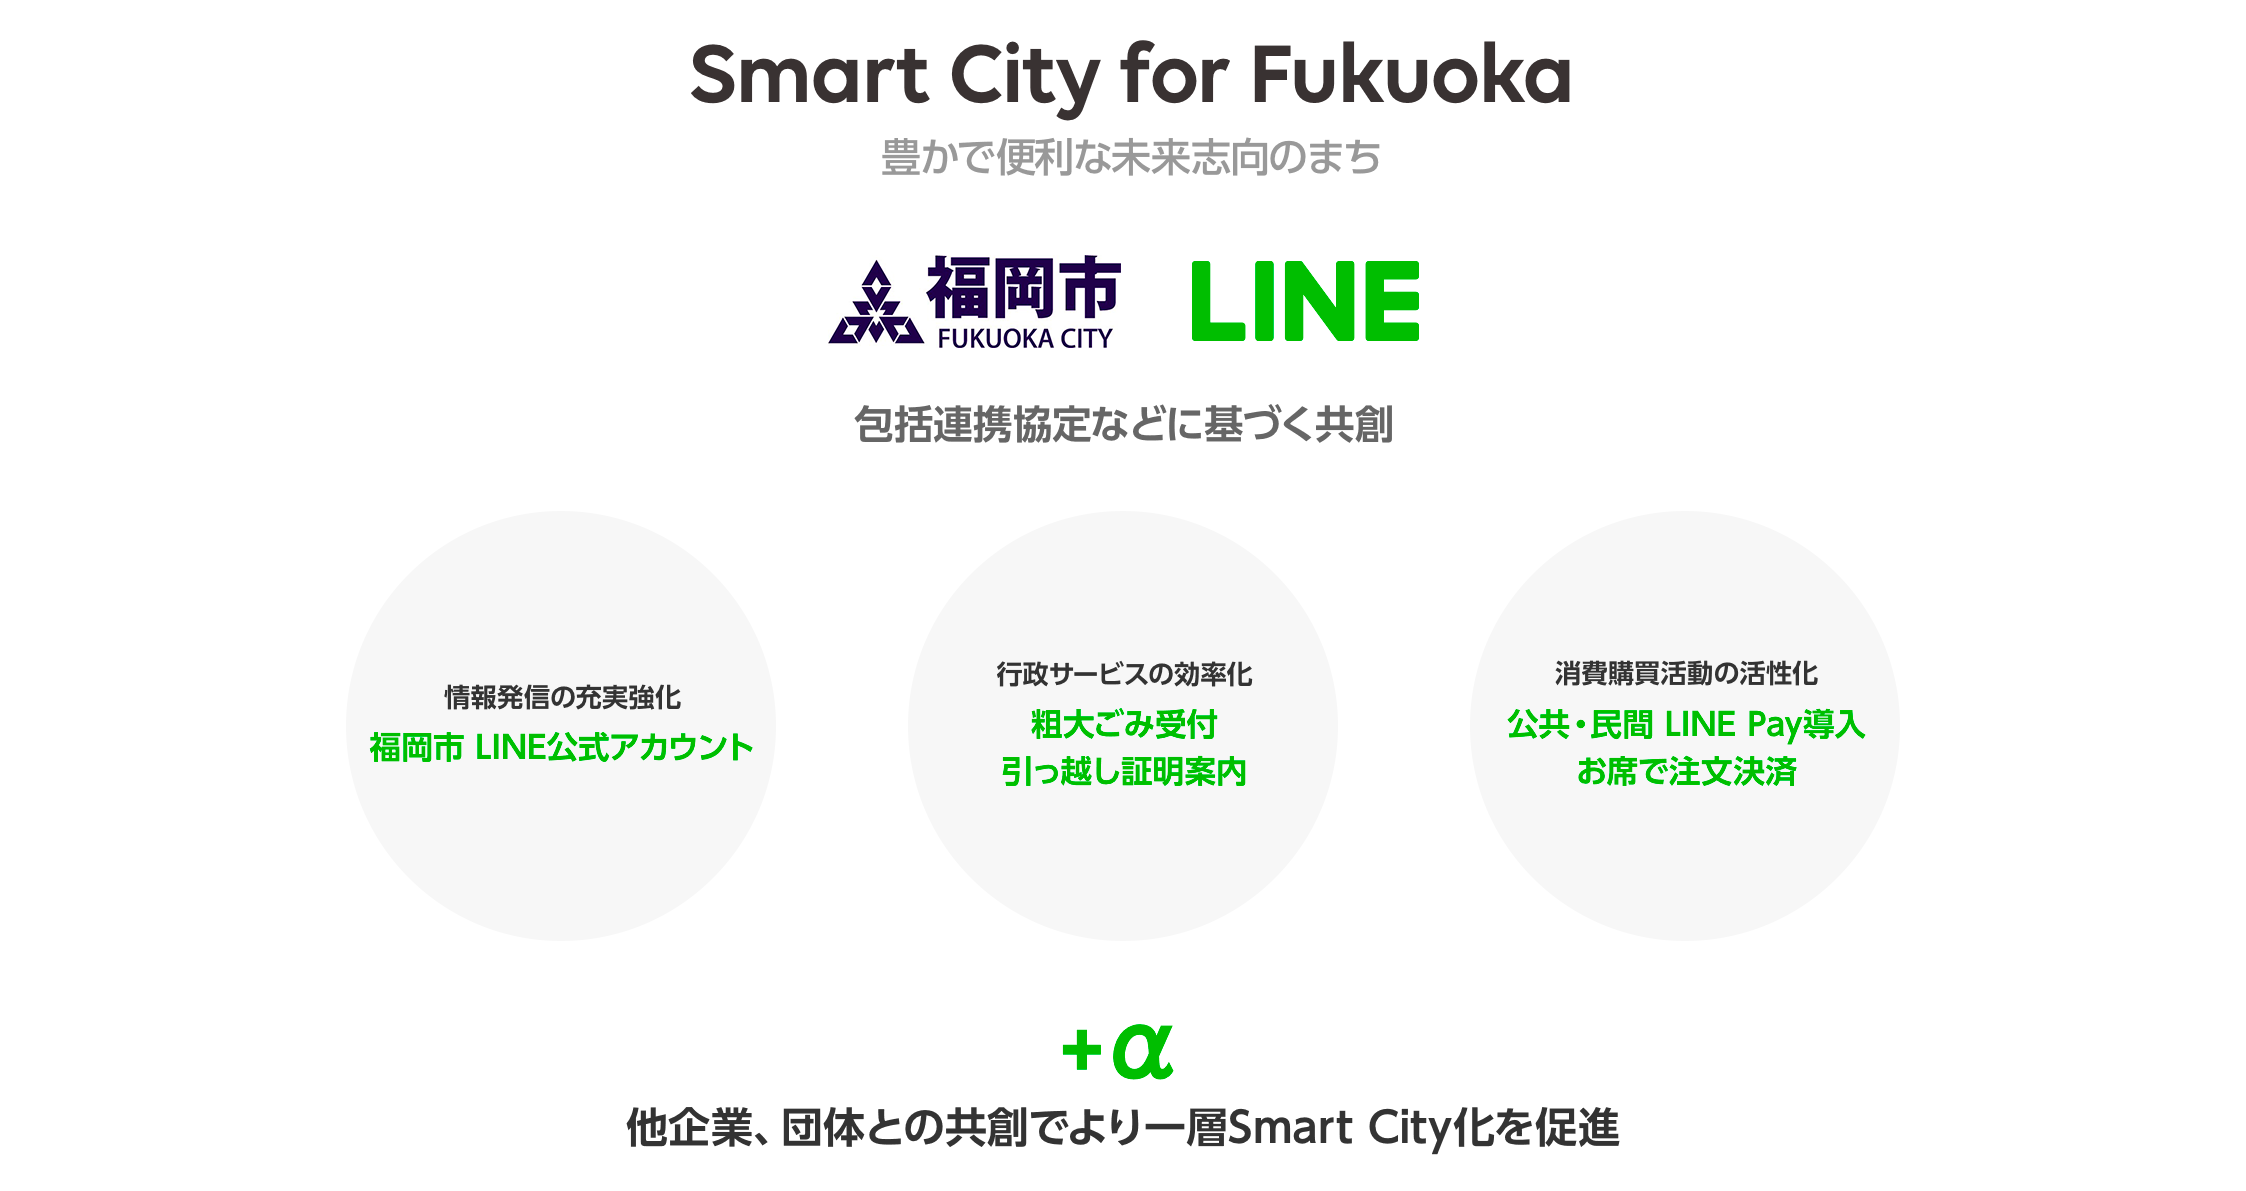 Smart City for Fukuoka